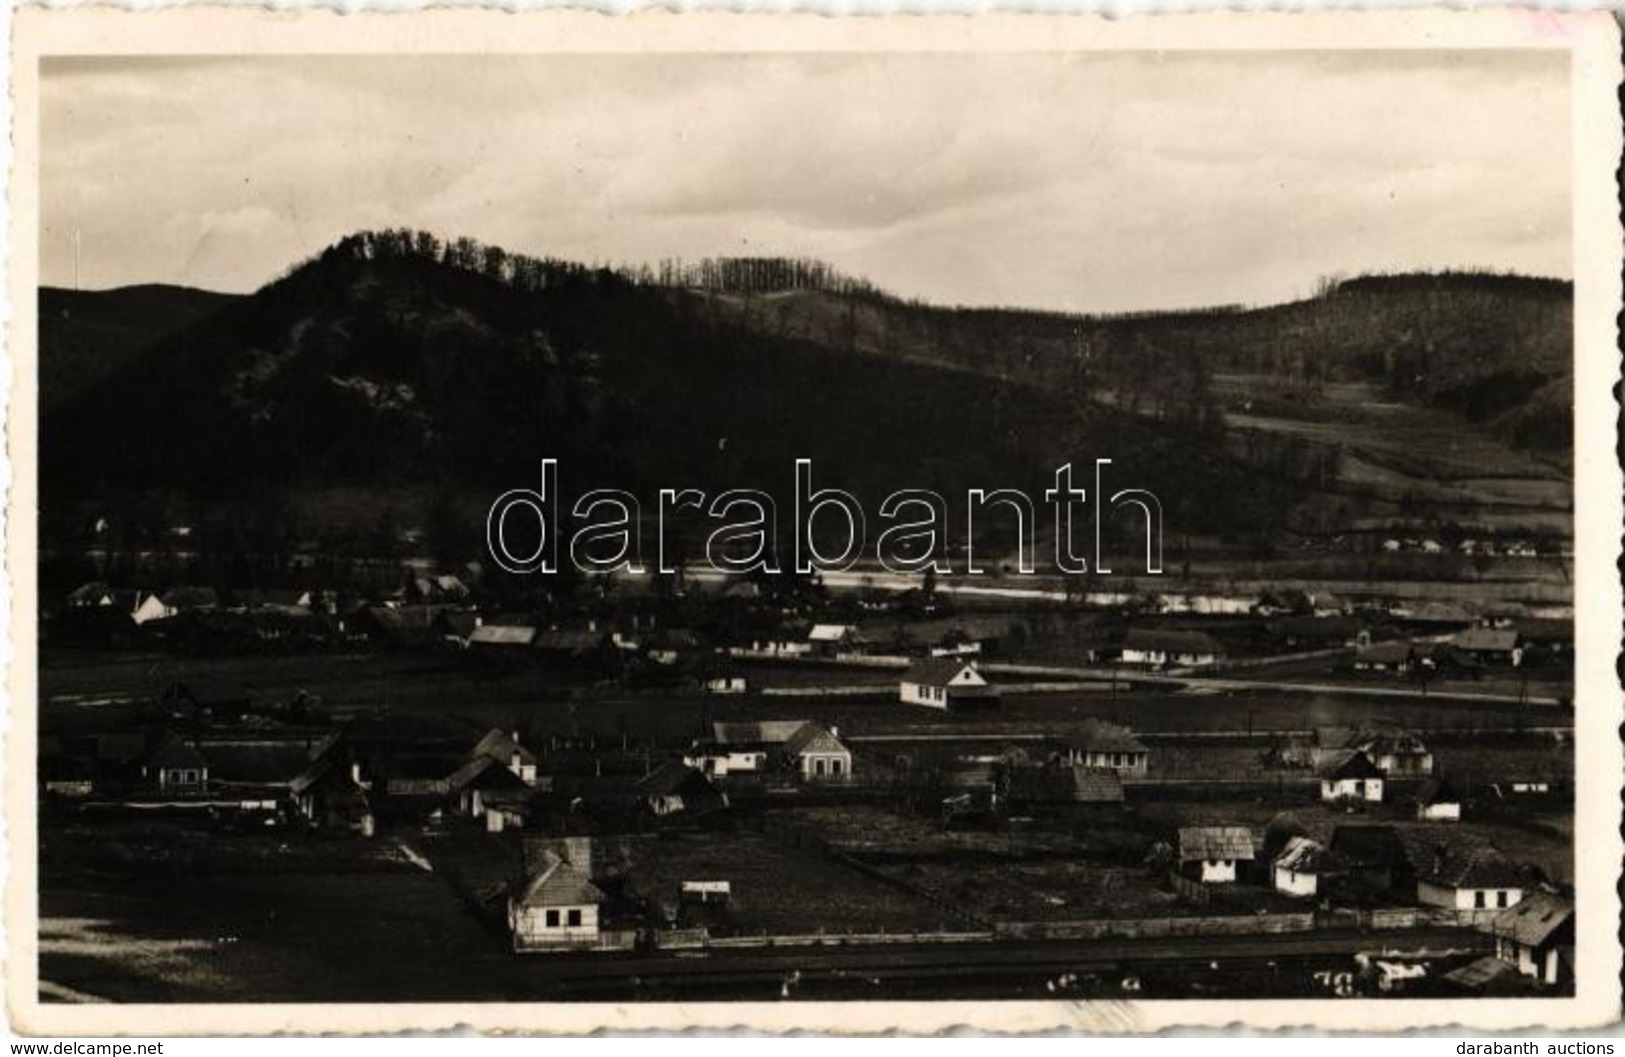 * T2 1944 Bethlen, Beclean; Látkép A Beke Heggyel / General View With Mountain - Ohne Zuordnung